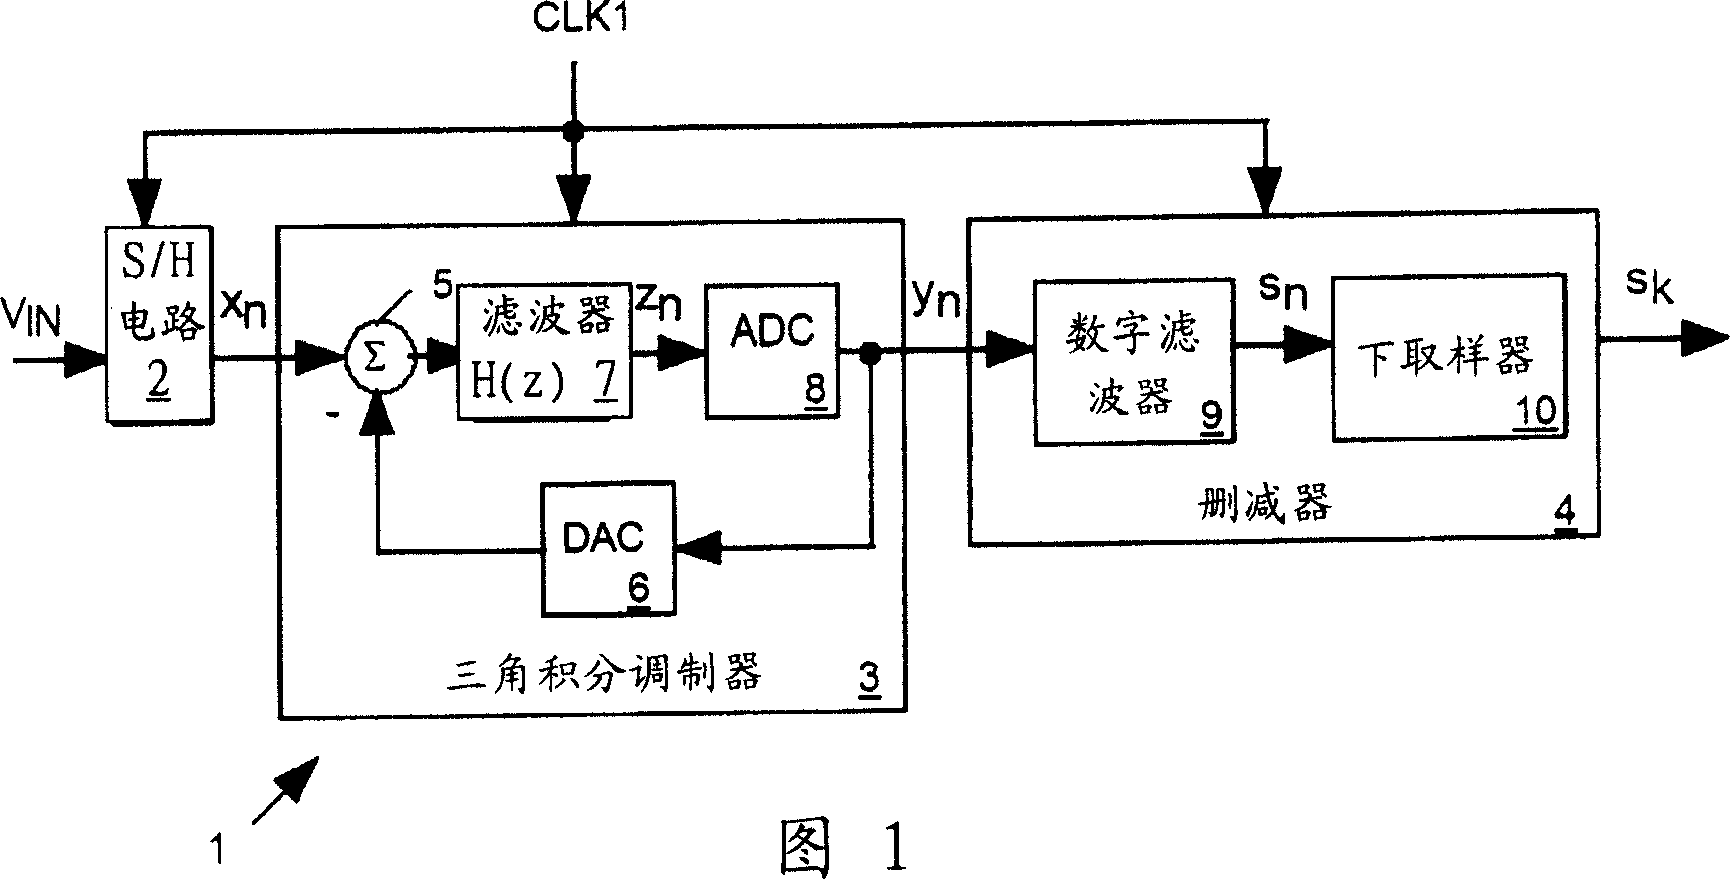 Multi-thread parallel processing sigma-delta ADC